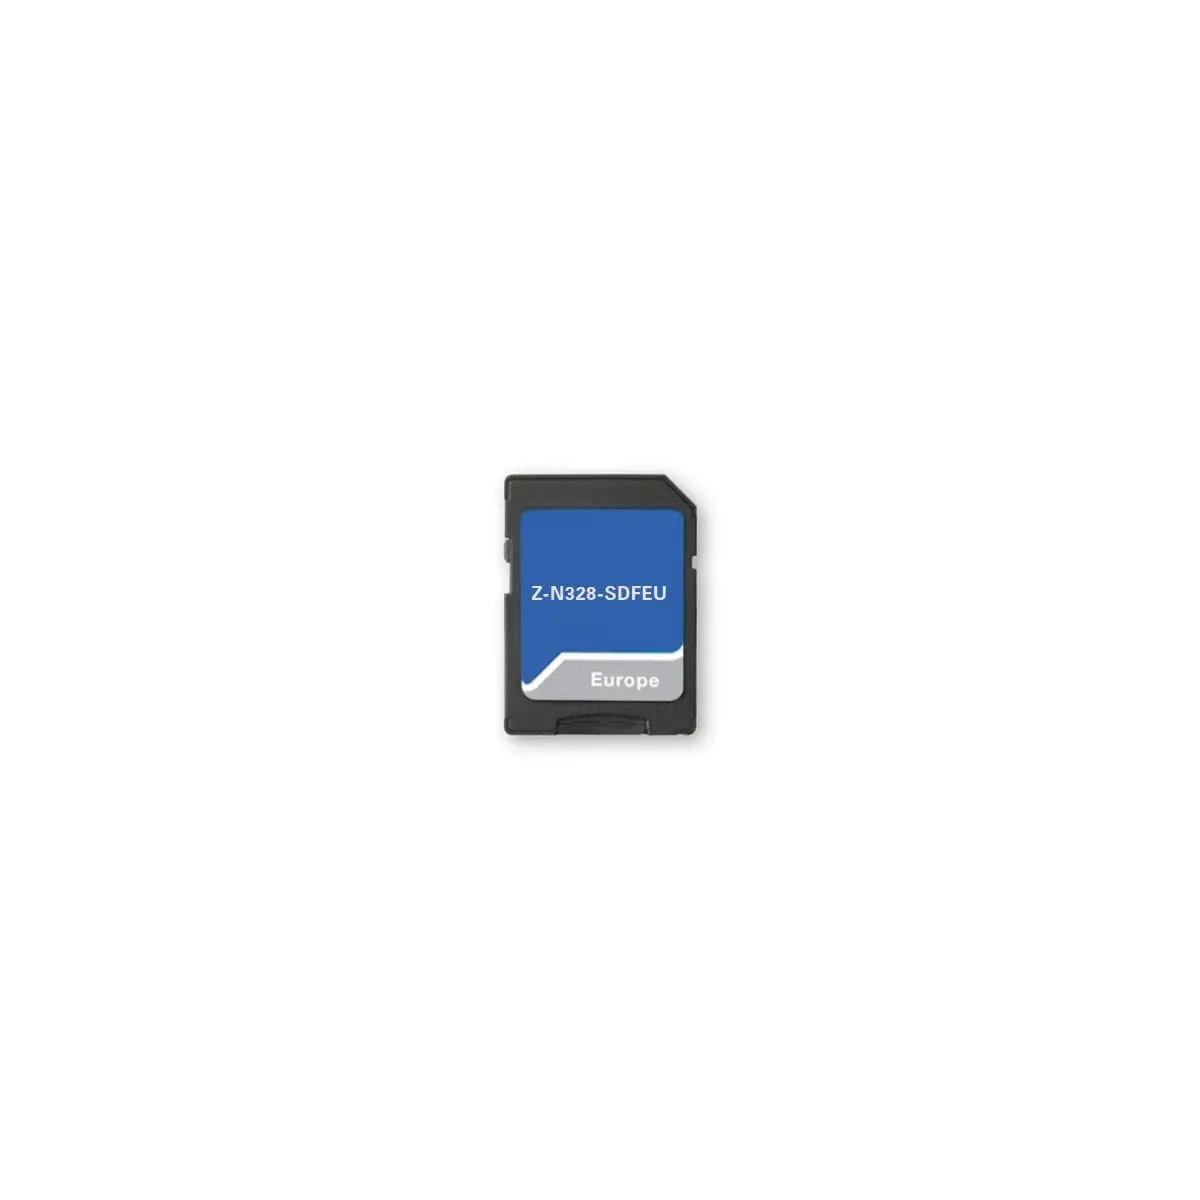 Z-N328-SDFEU   16 GB microSD karta mapami EU